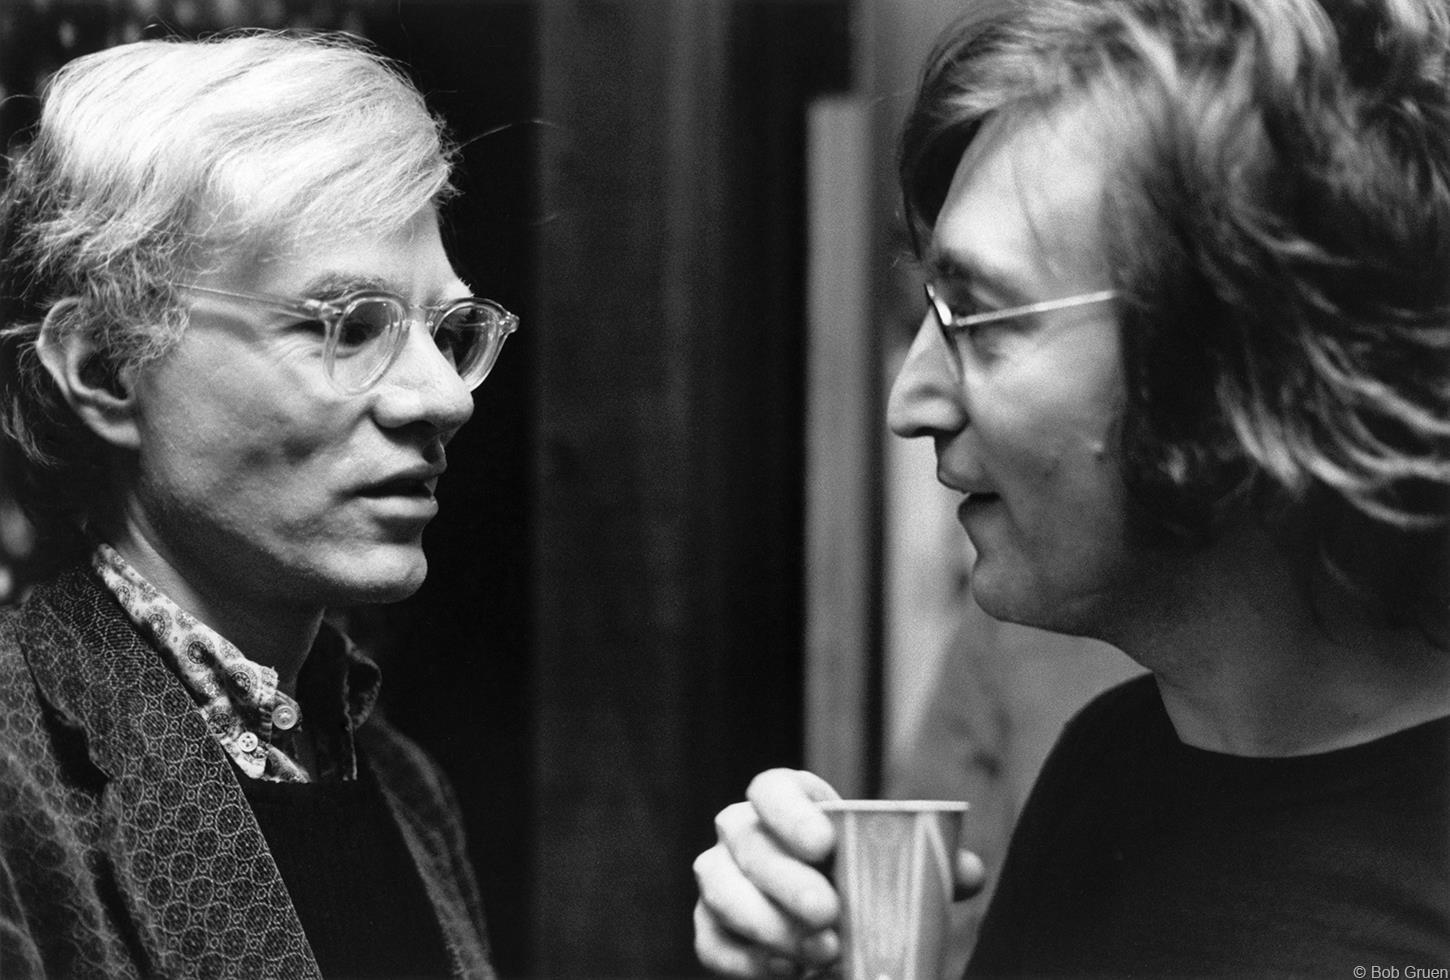 Bob Gruen Portrait Photograph - John Lennon & Andy Warhol, NYC, 1972